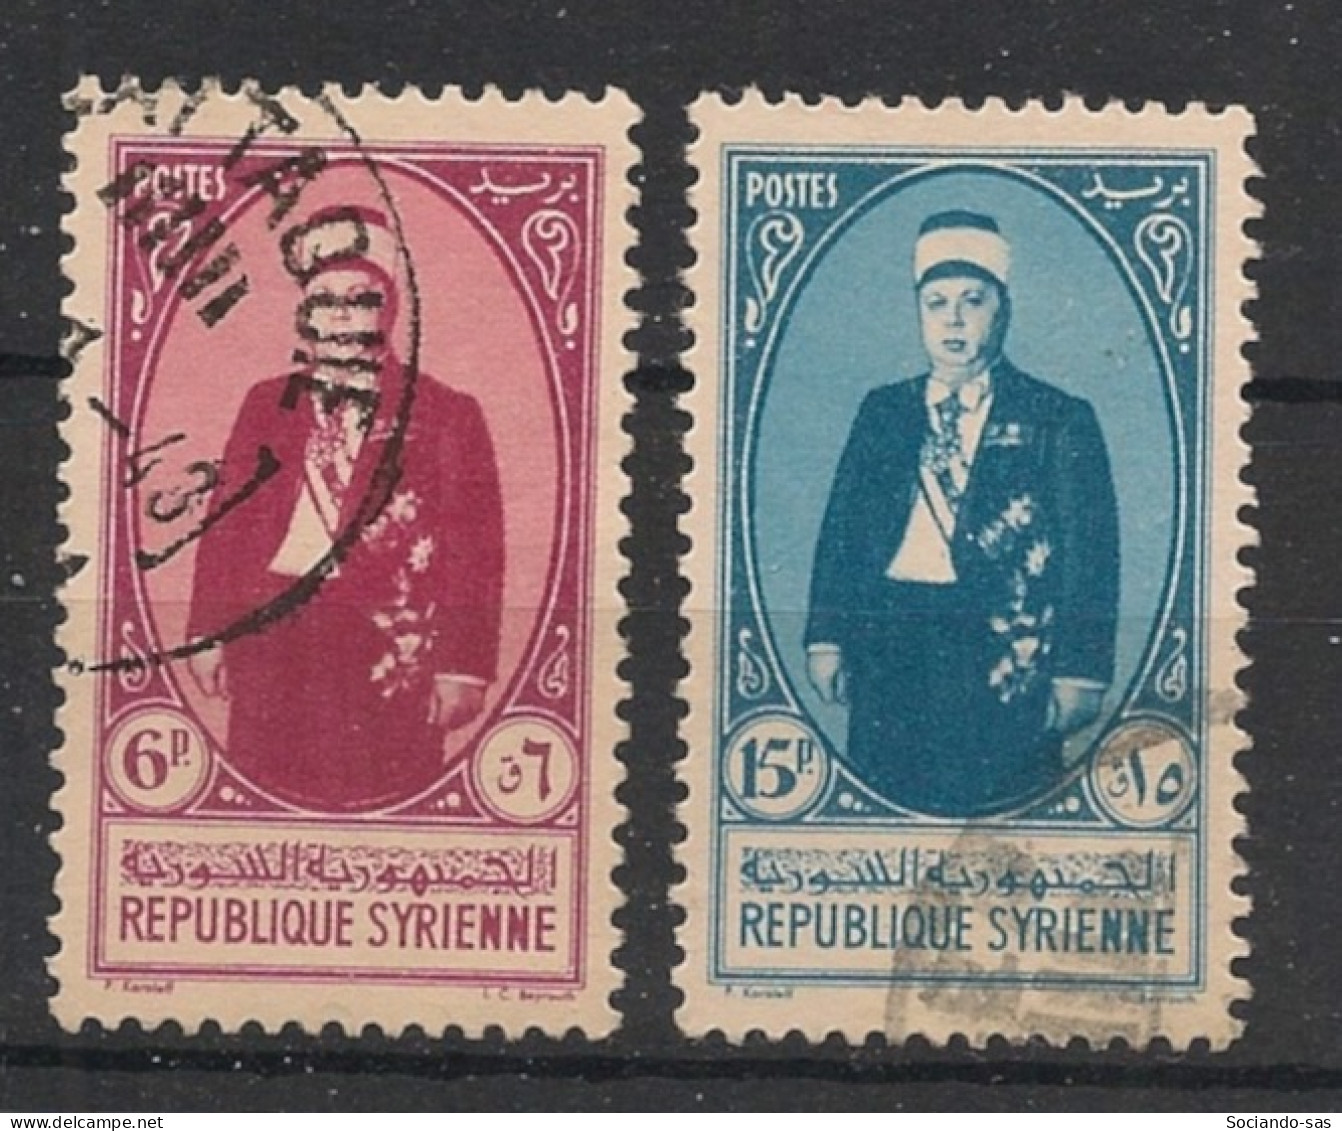 SYRIE - 1942 - N°YT. 264 Et 265 - Président El Hassani - Oblitéré / Used - Used Stamps